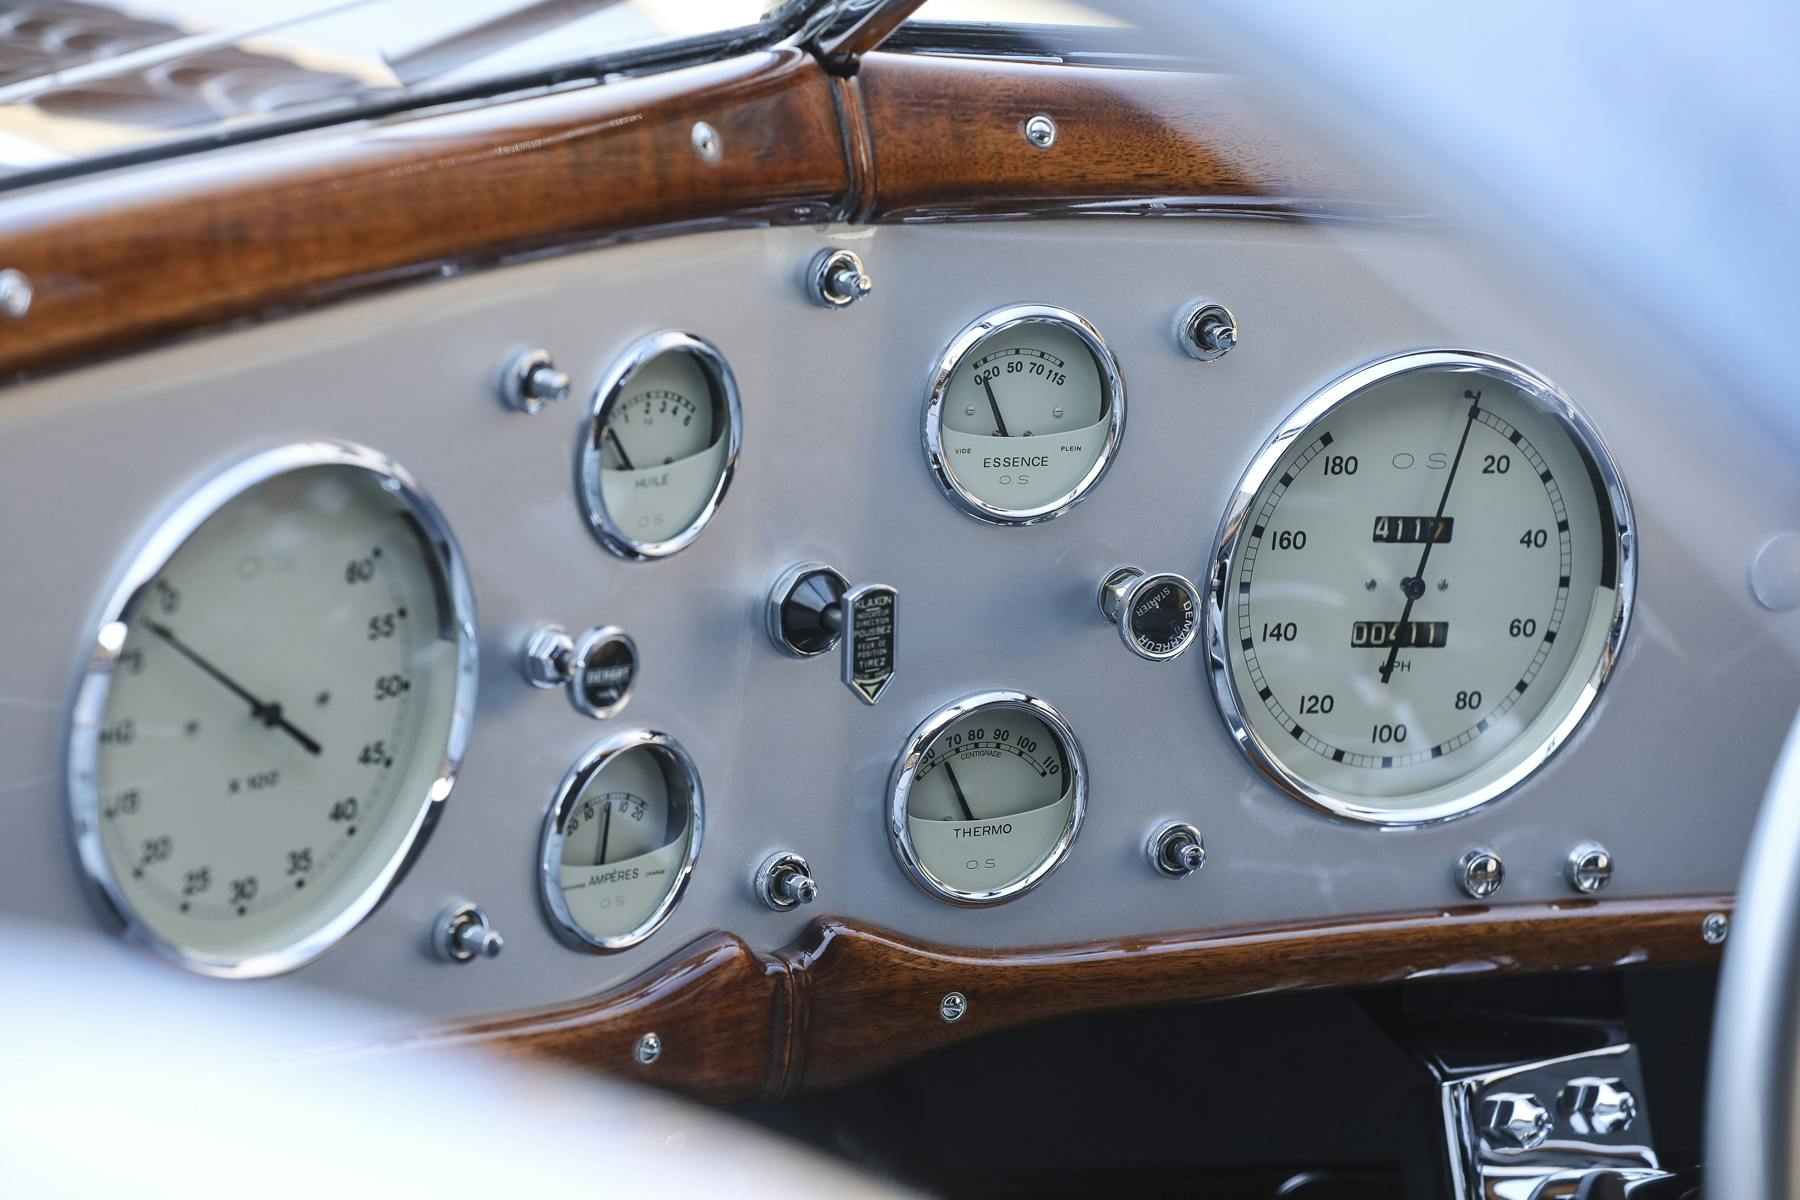 1937 Talbot-Lago T150-C-SS Teardrop Coupe 1937 Talbot-Lago T150-C-SS Teardrop Coupe interior dash panel gauges